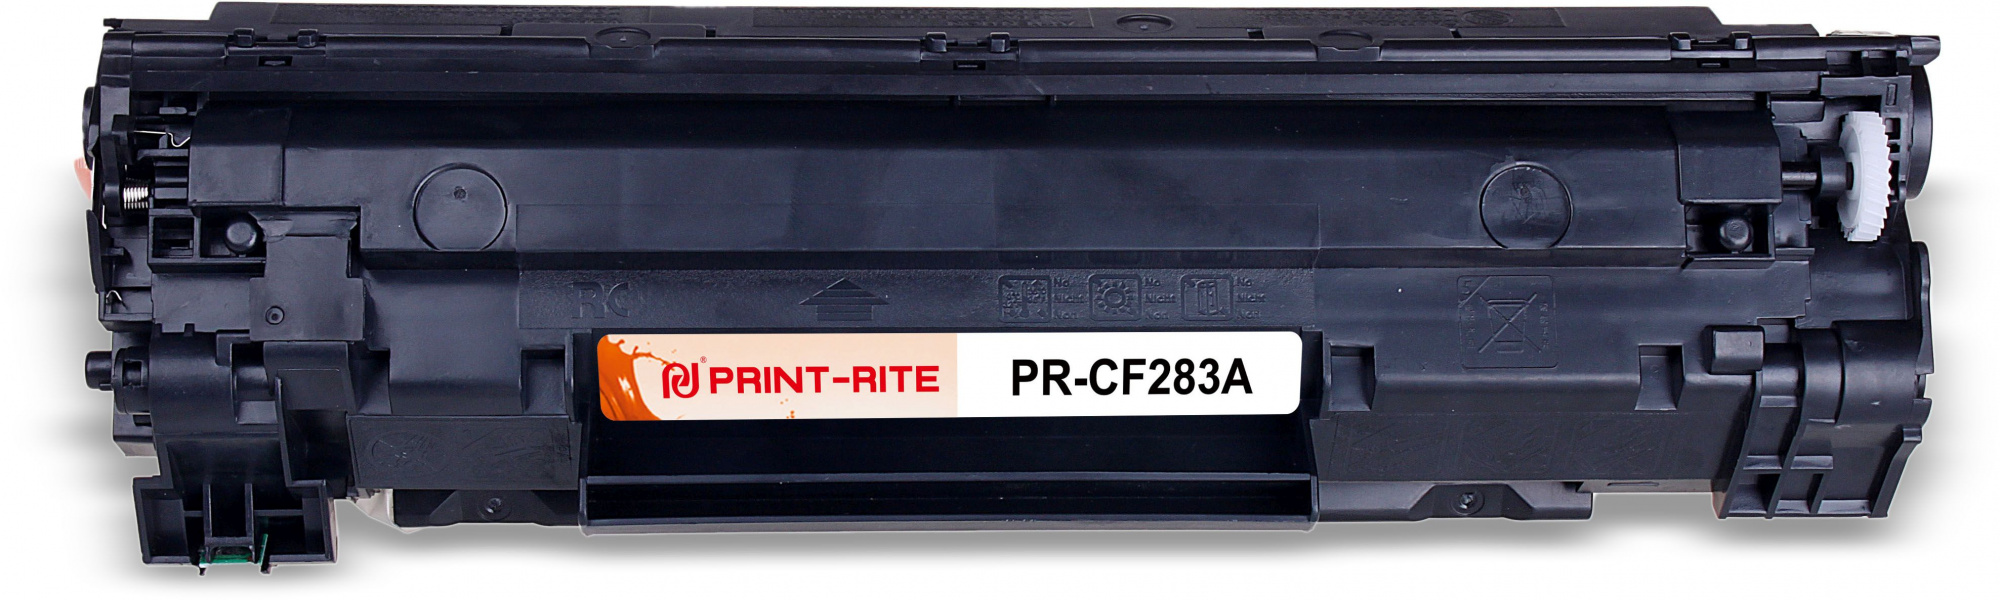   Print-Rite TFH780BPU1J PR-CF283A CF283A  (1500.)  HP LJ Pro M125nw/M127fw